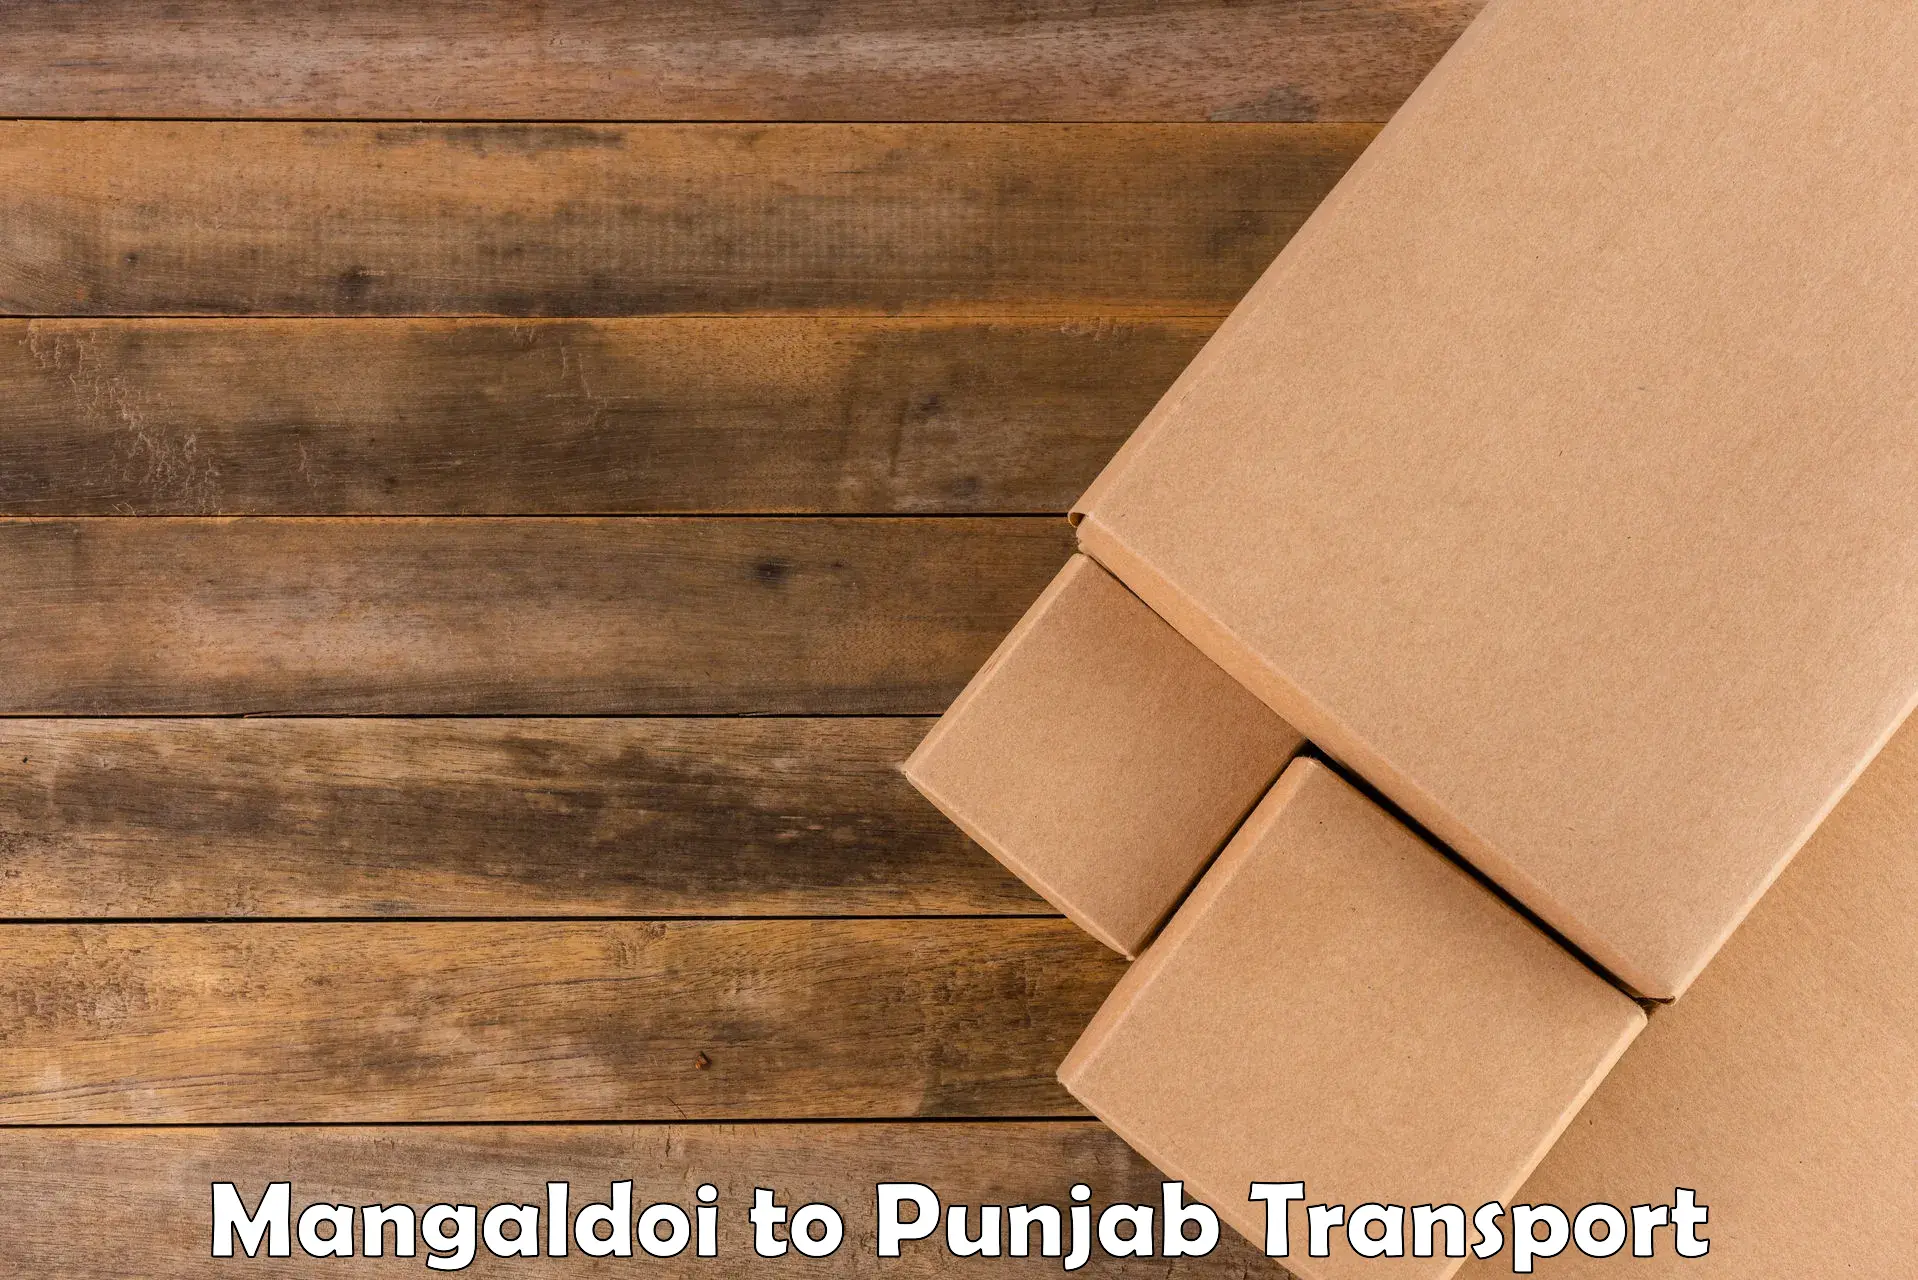 Daily transport service Mangaldoi to Faridkot